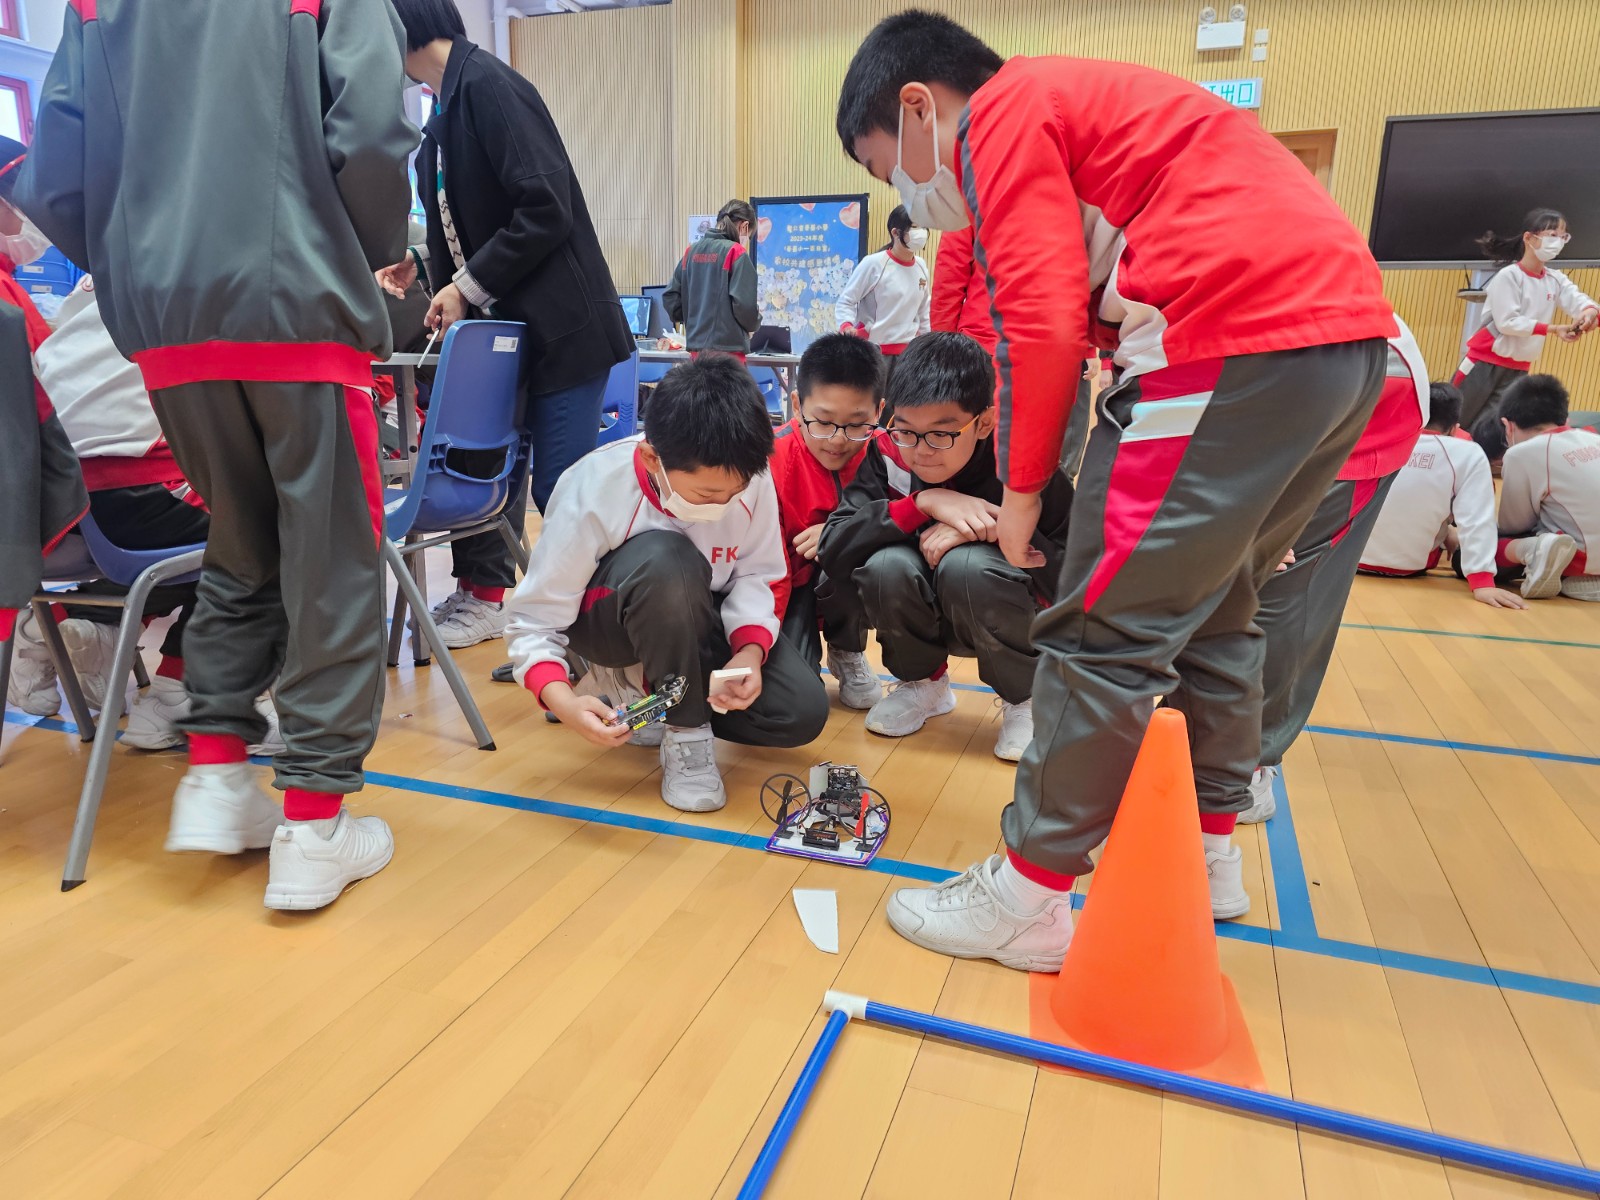 Hovercraft Fun Day - SKH Fung Kei Primary School